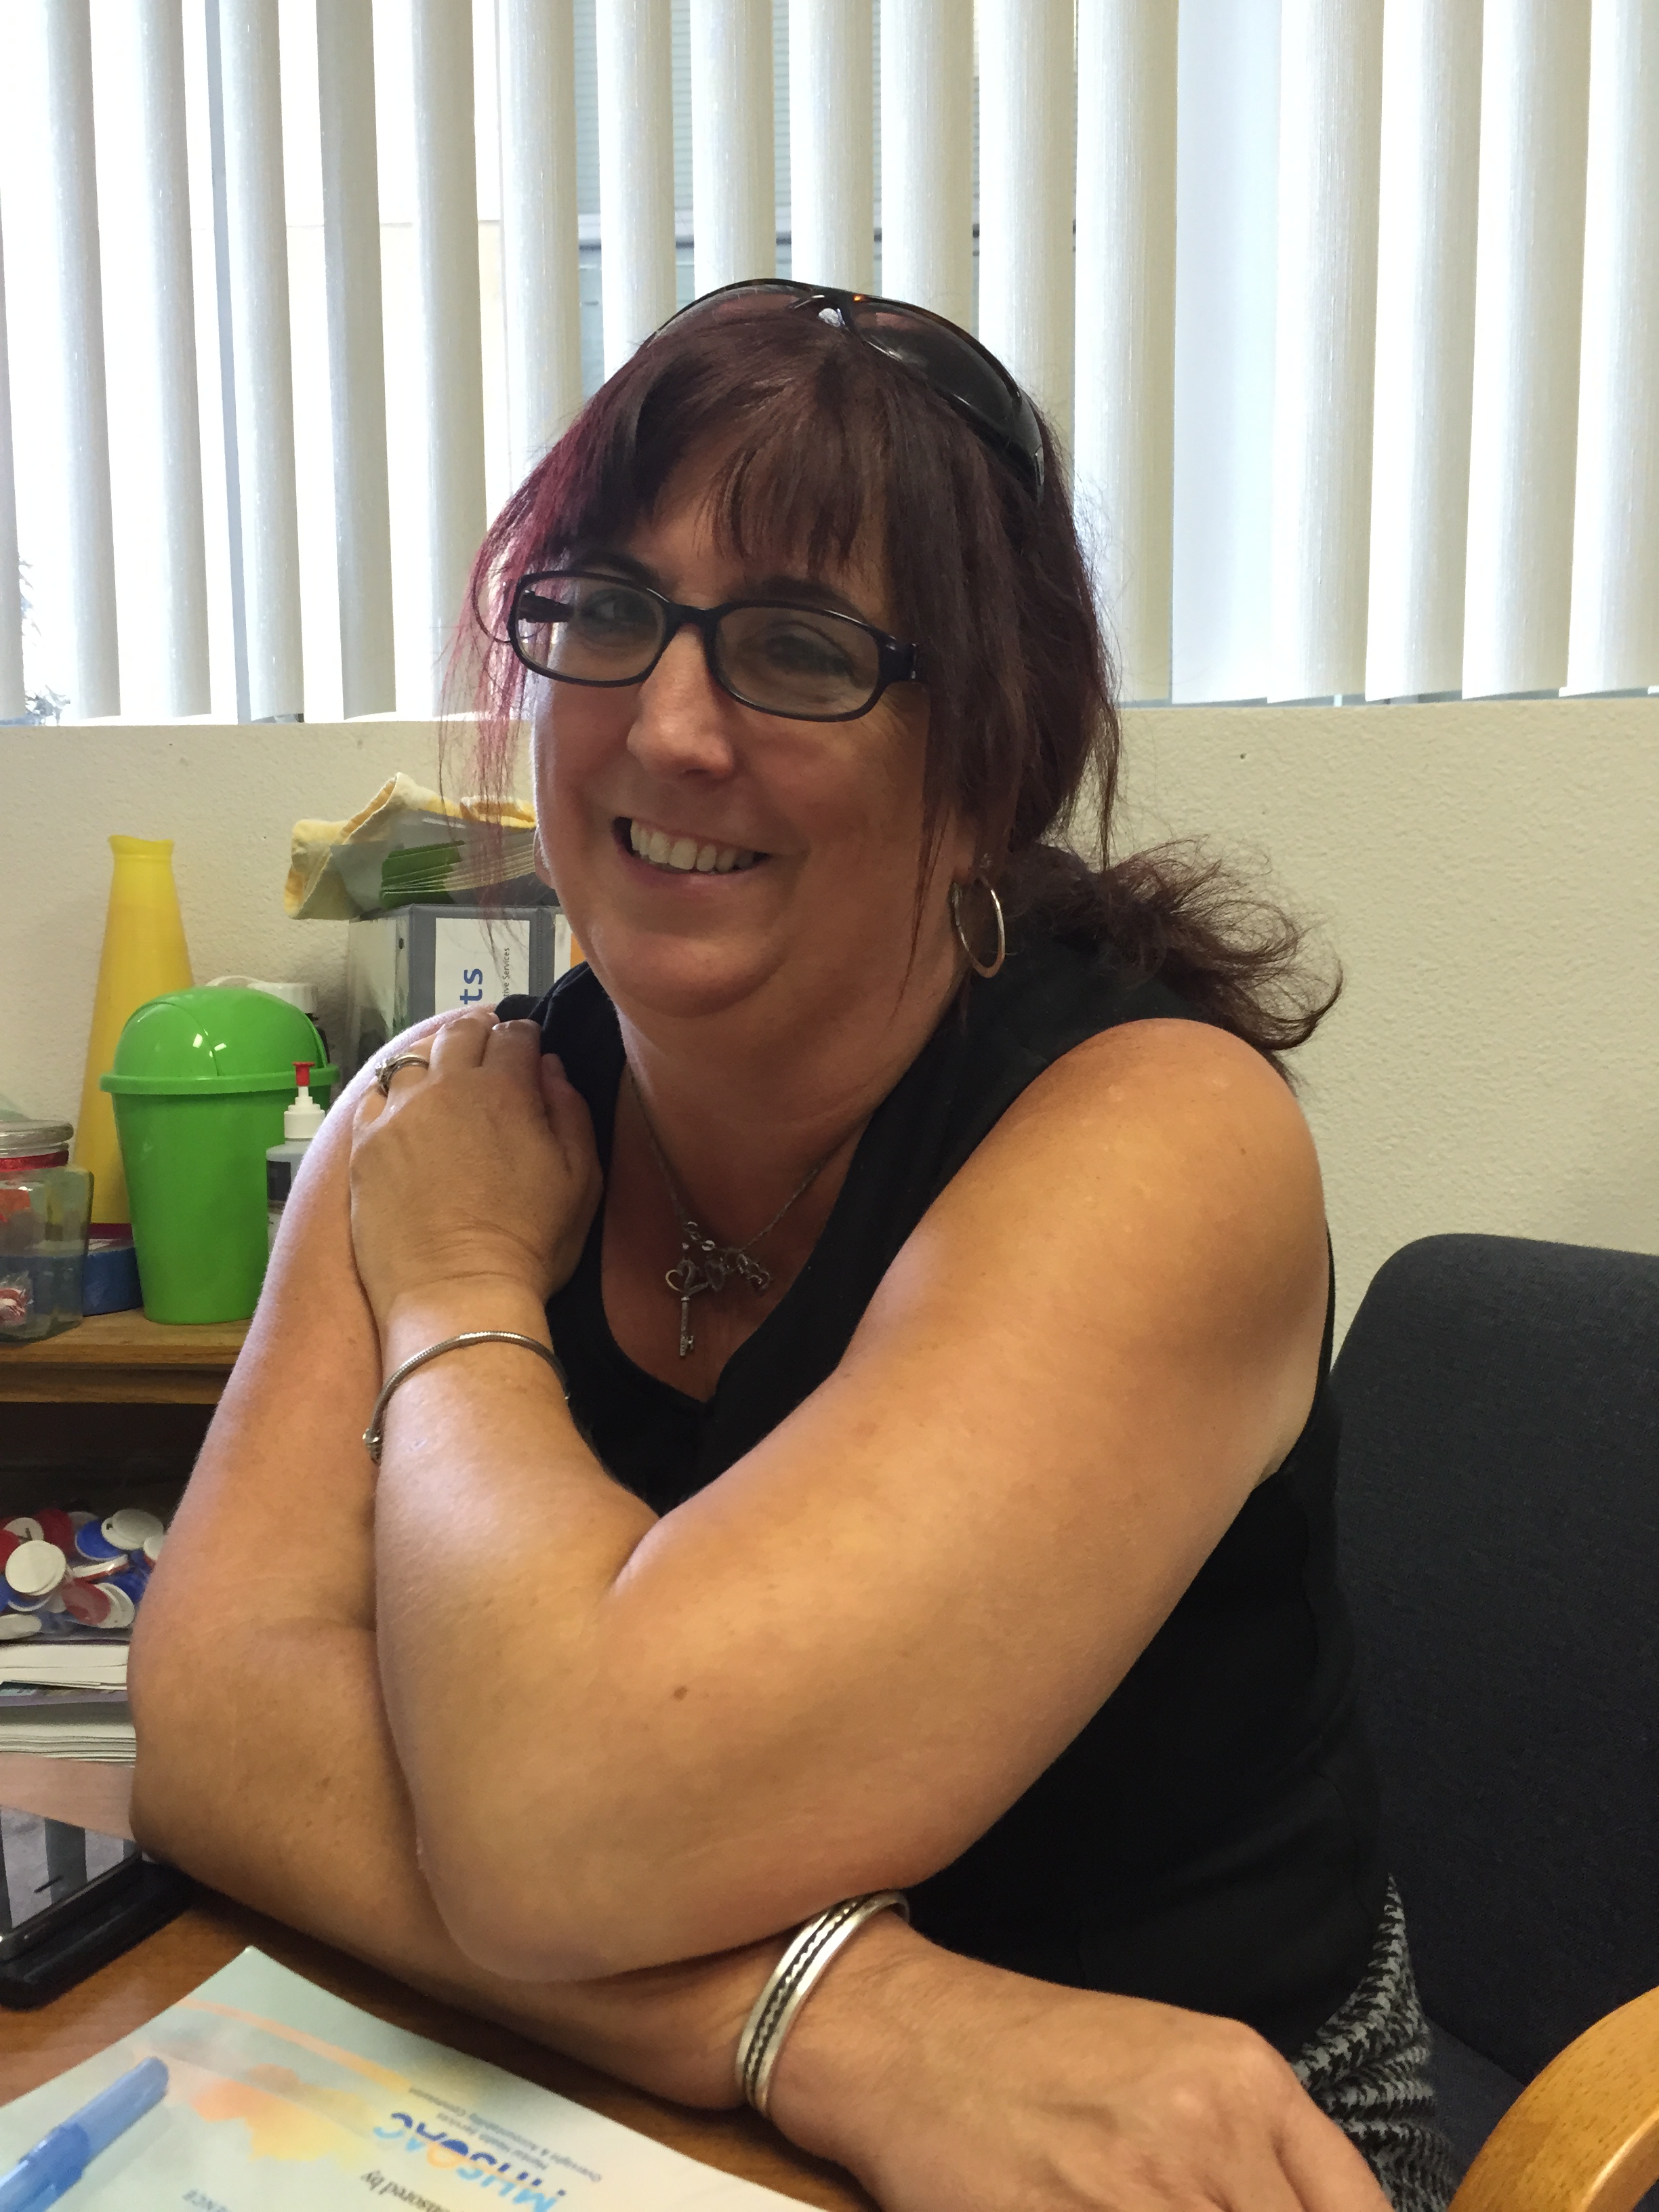 Karen Markland, Division Manager for the Fresno County Department of Behavioral Health